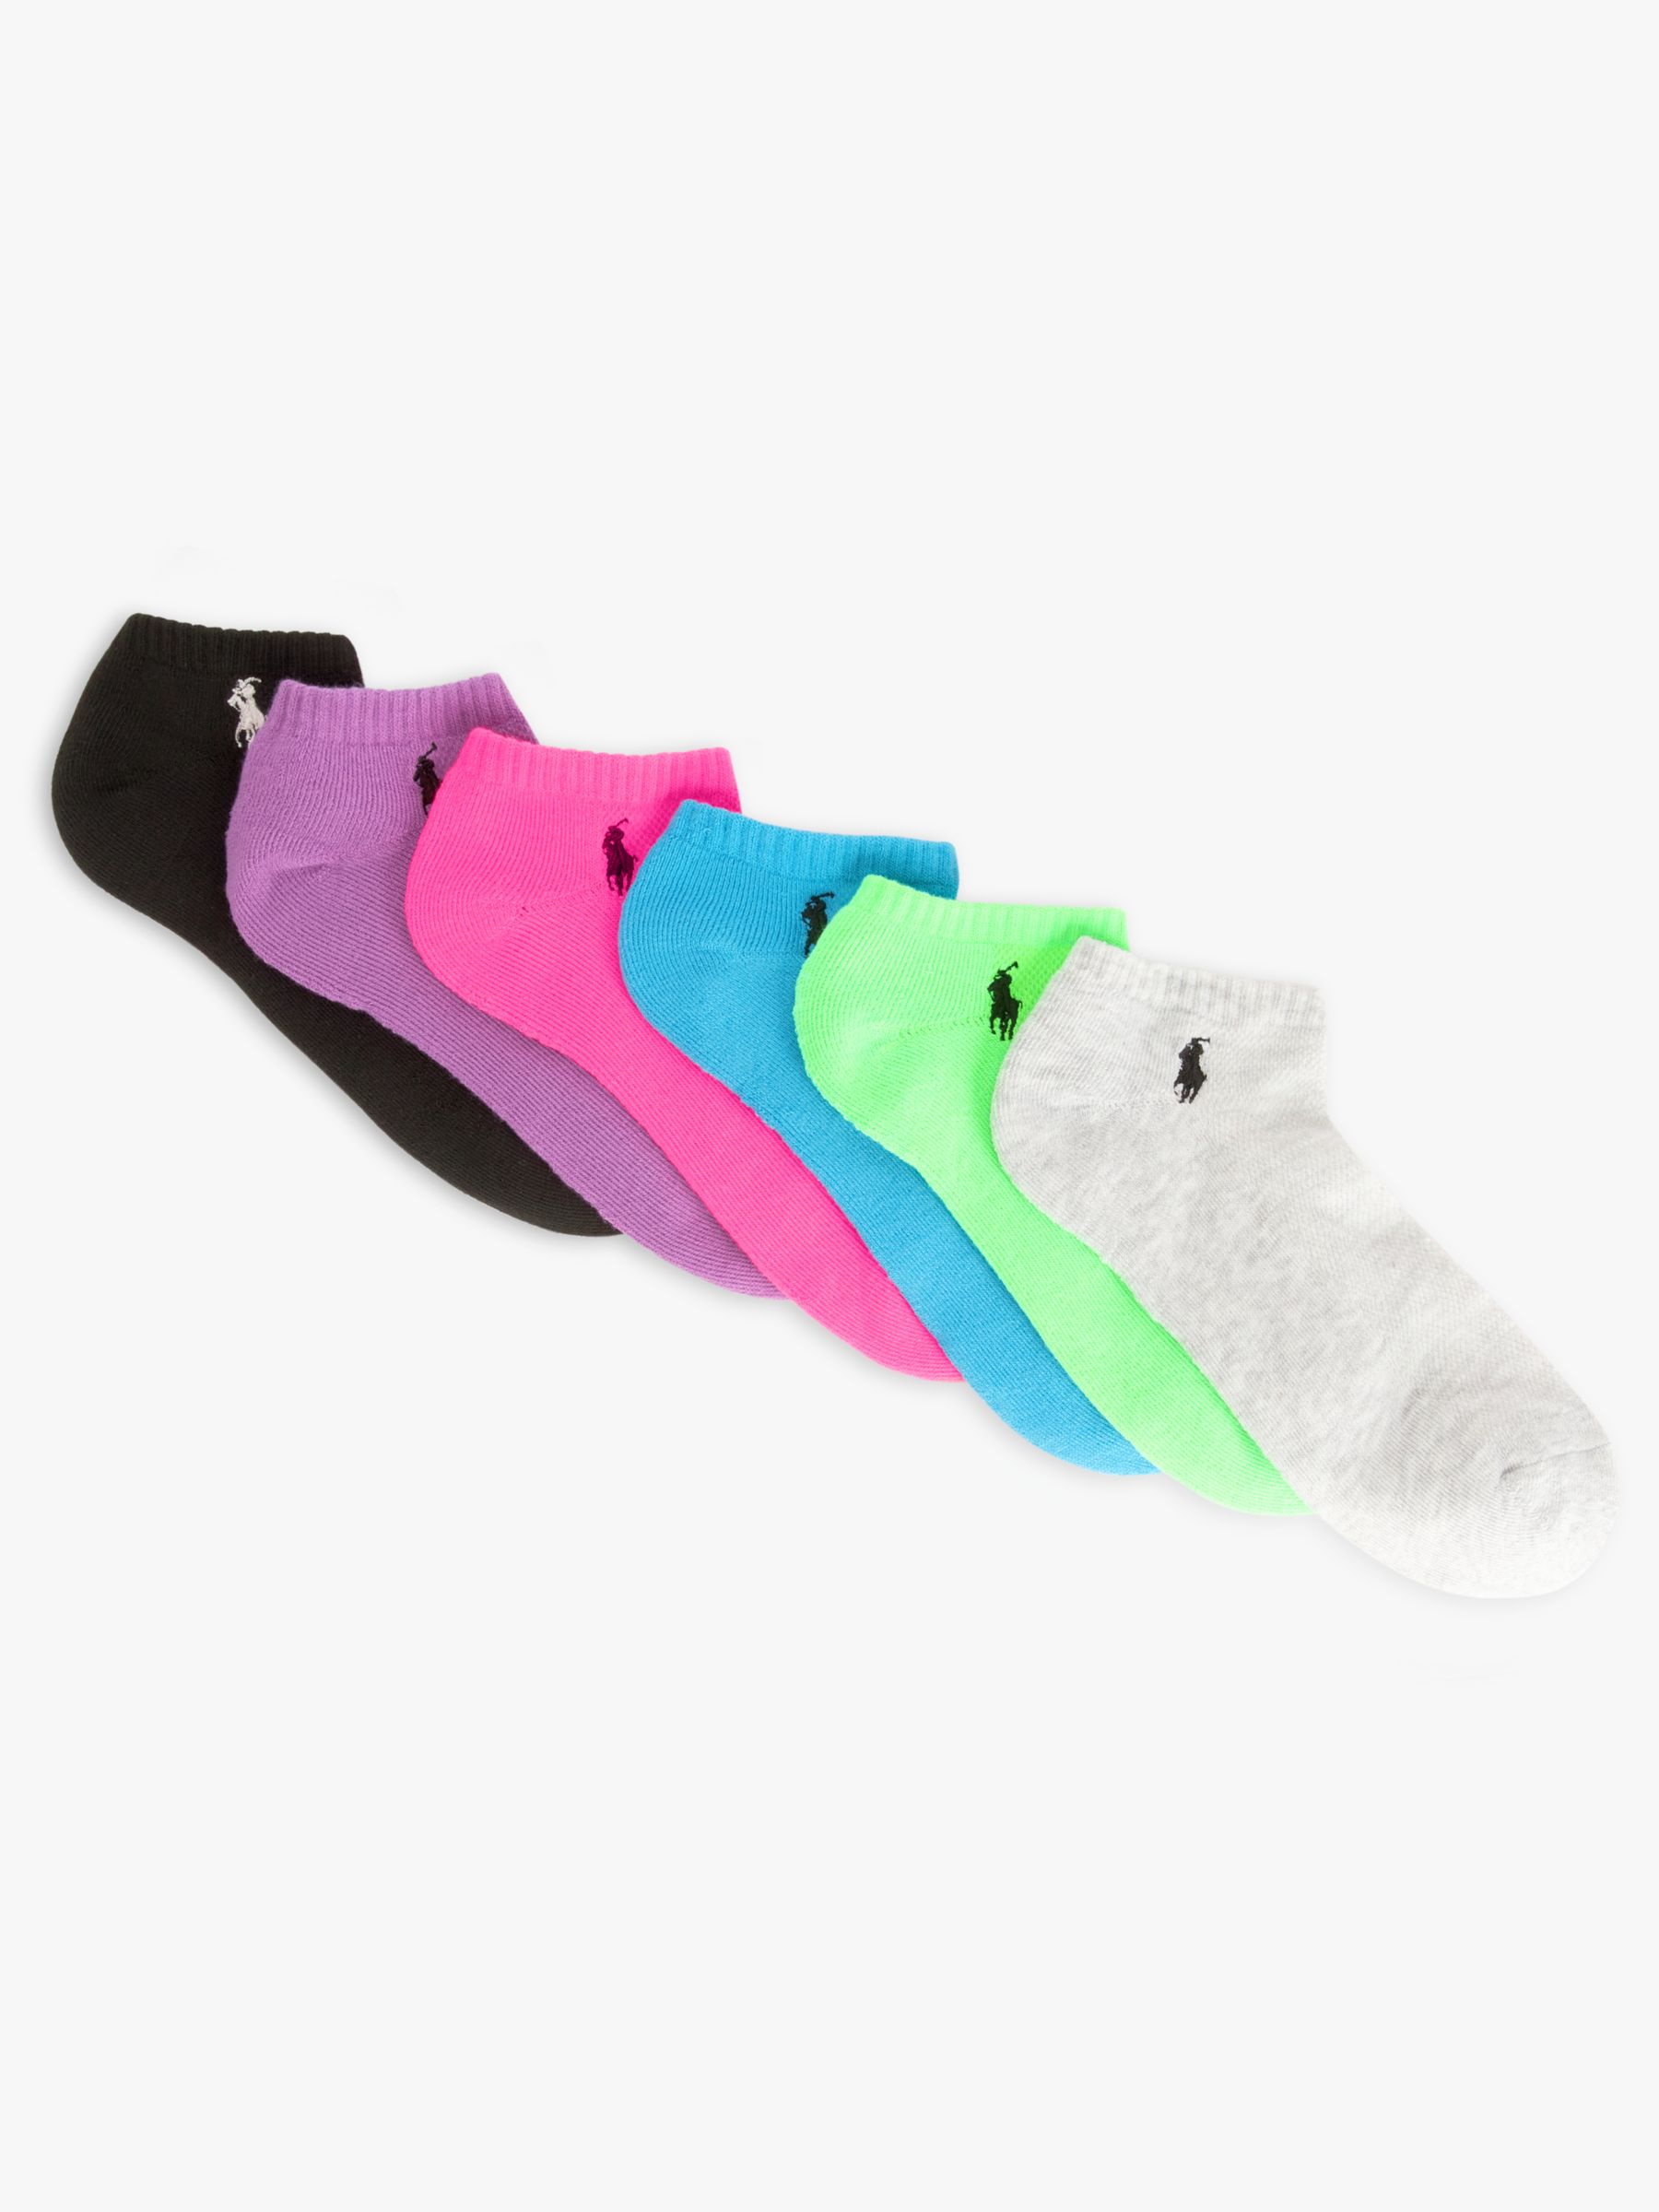 Ralph Lauren Cushion Trainers Socks, Pack of 6, Multi